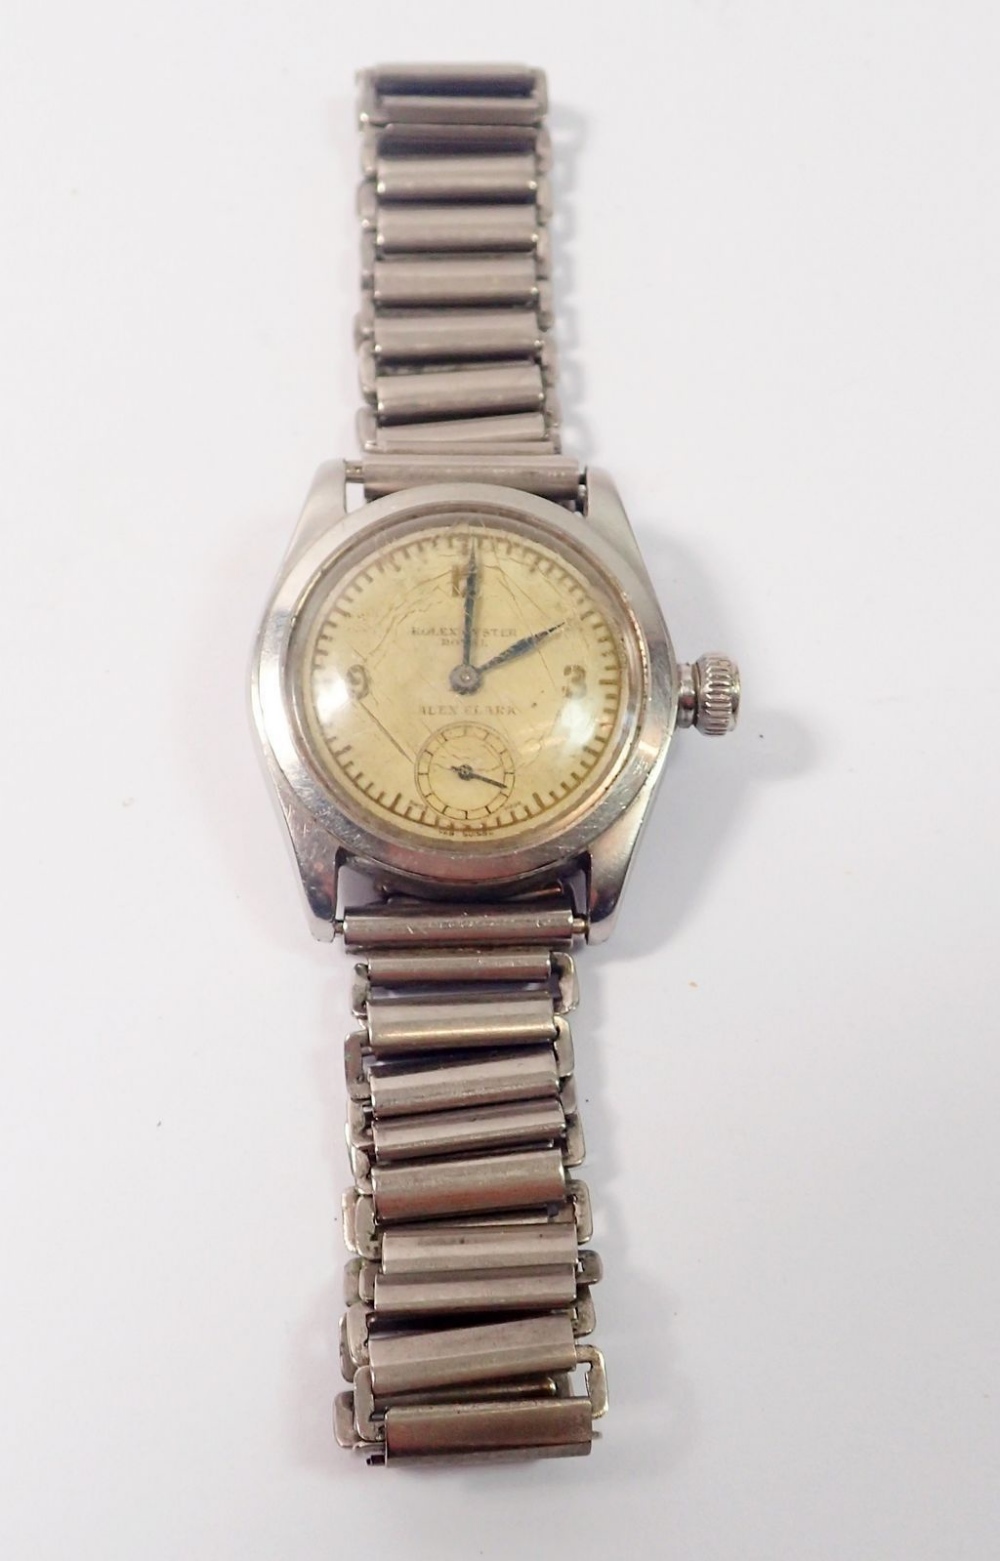 A Rolex Oyster Royal stainless steel wrist watch, No. 78545, external face 3cm across